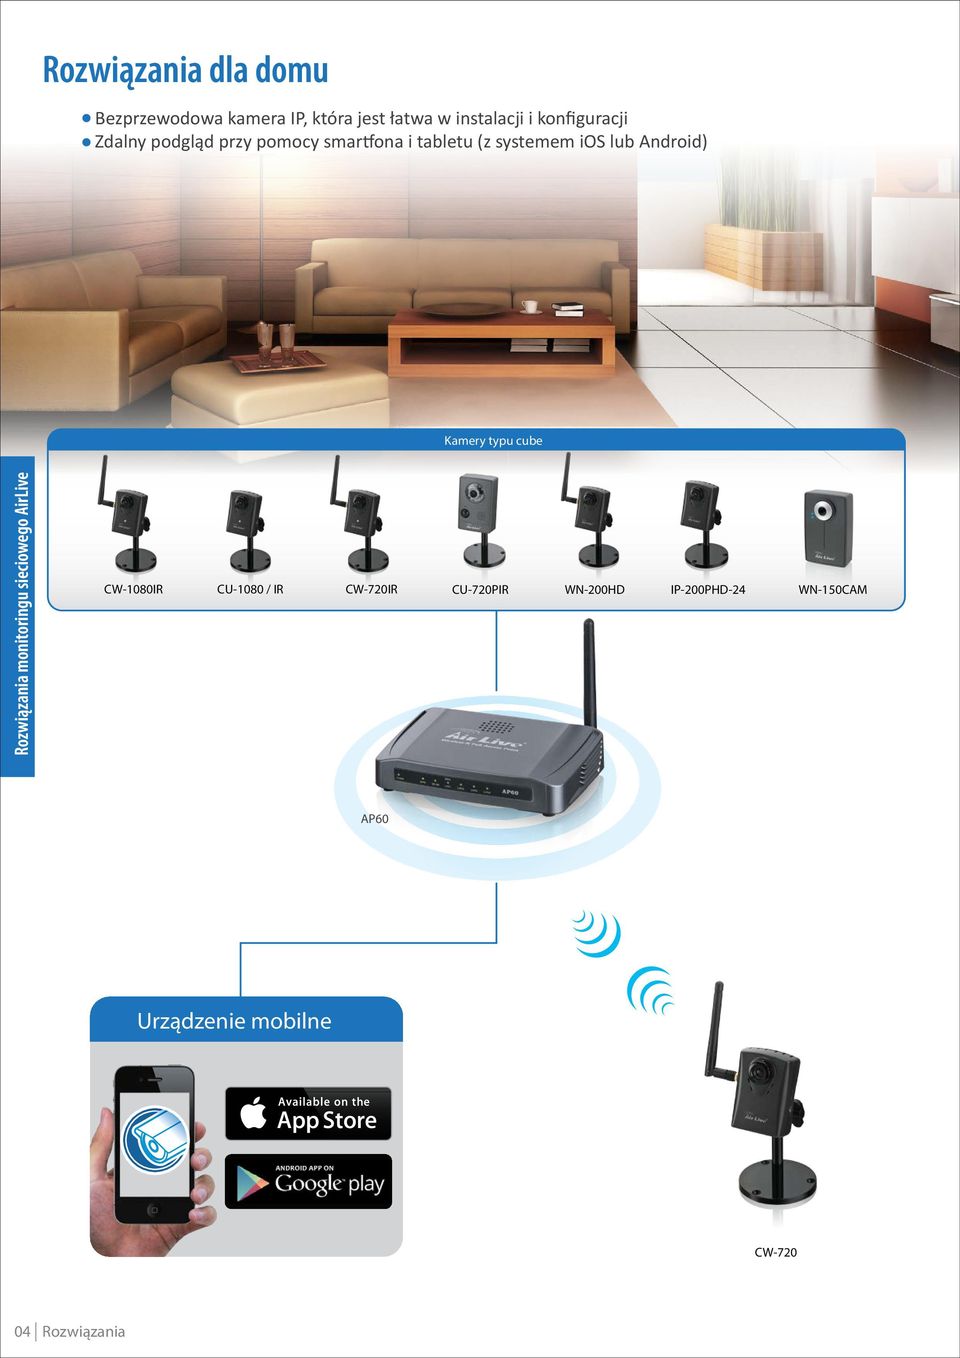 Android) Rozwiązania monitoringu sieciowego AirLive Kamery typu cube CW1080IR